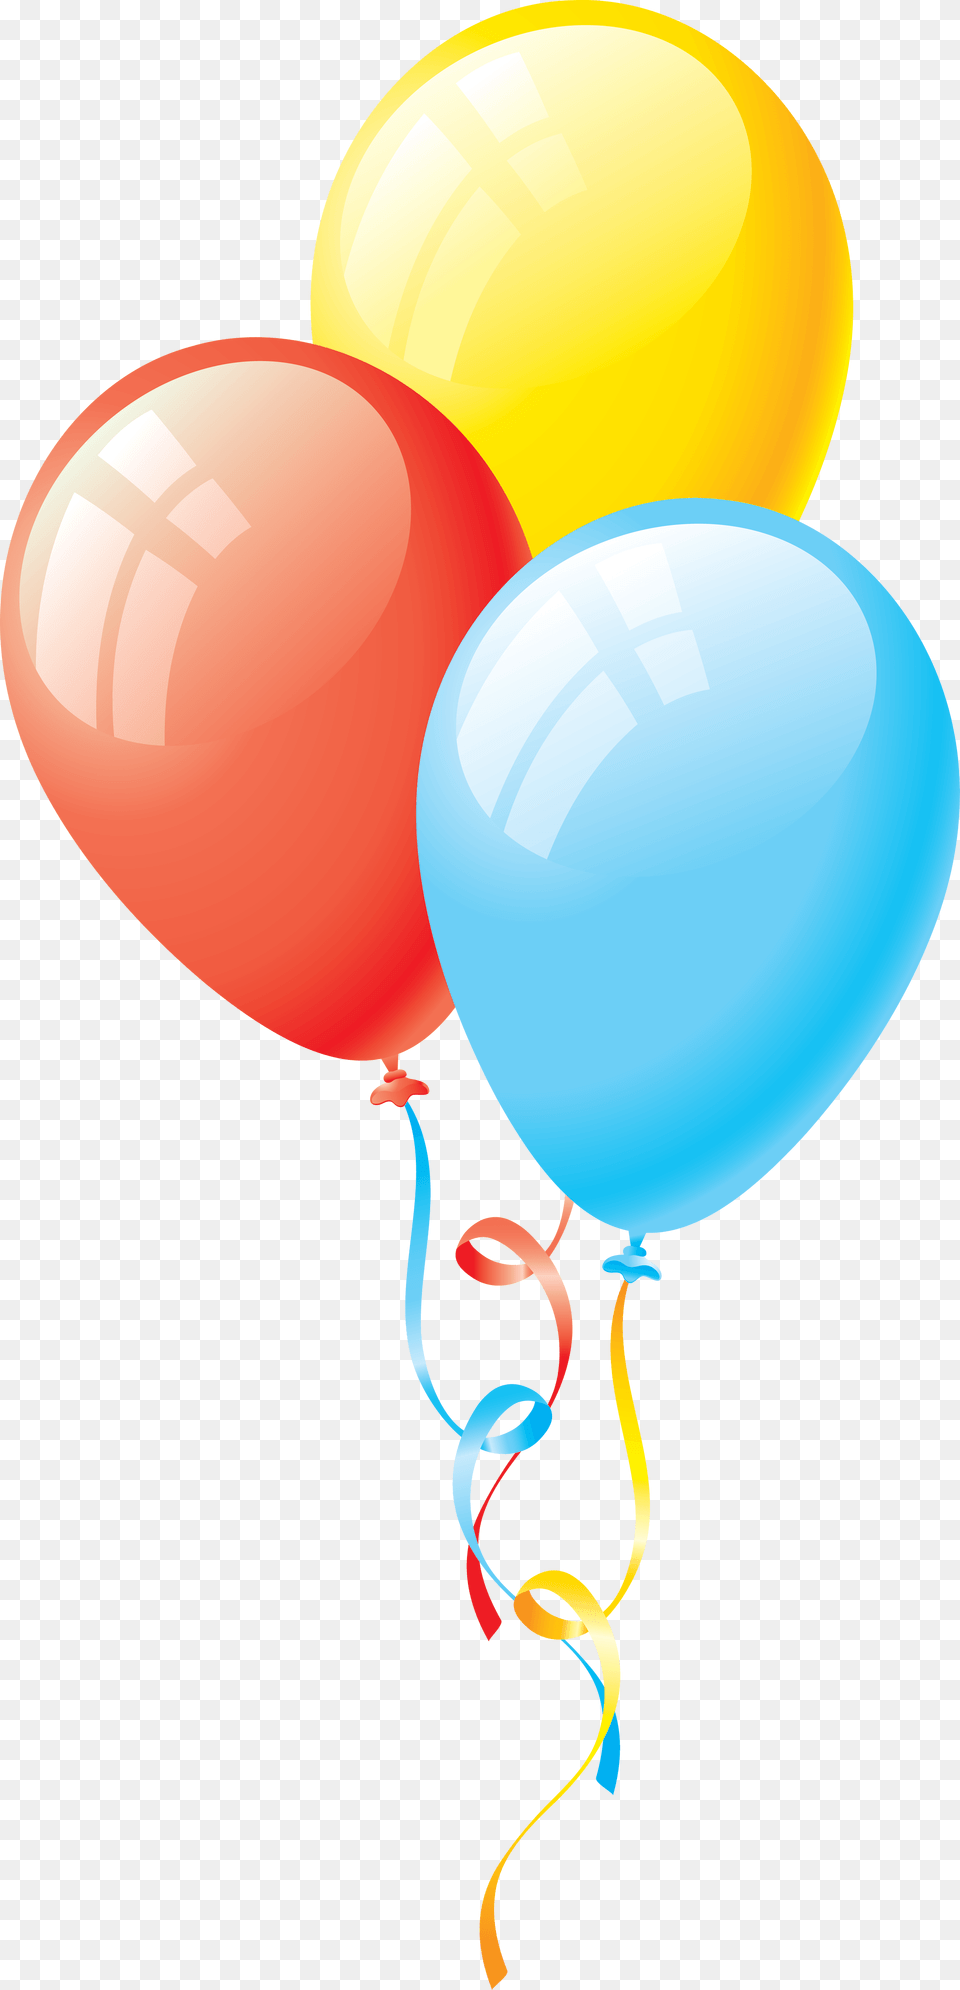 Celebrative Birthday Balloons Image Balloon Png